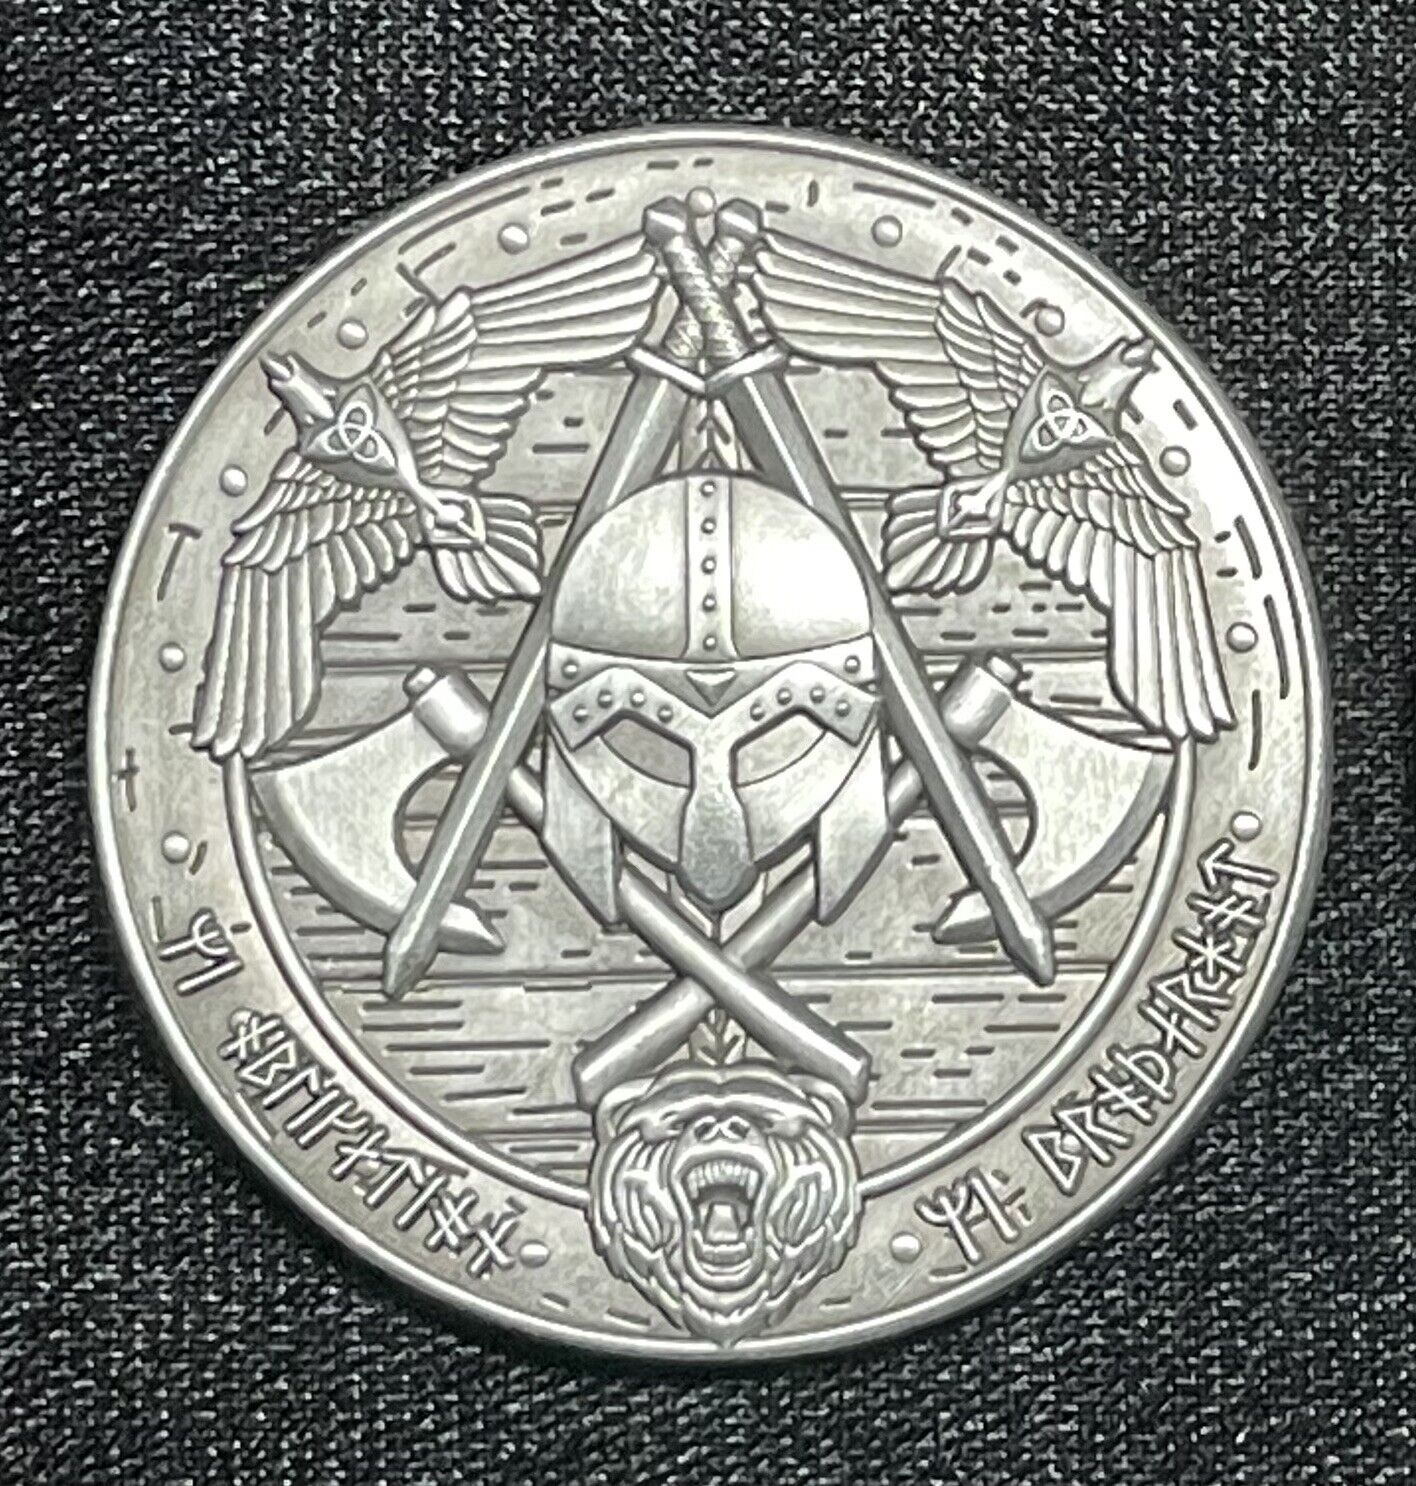 Viking Challenge coin Freemason Masonic, 1.75